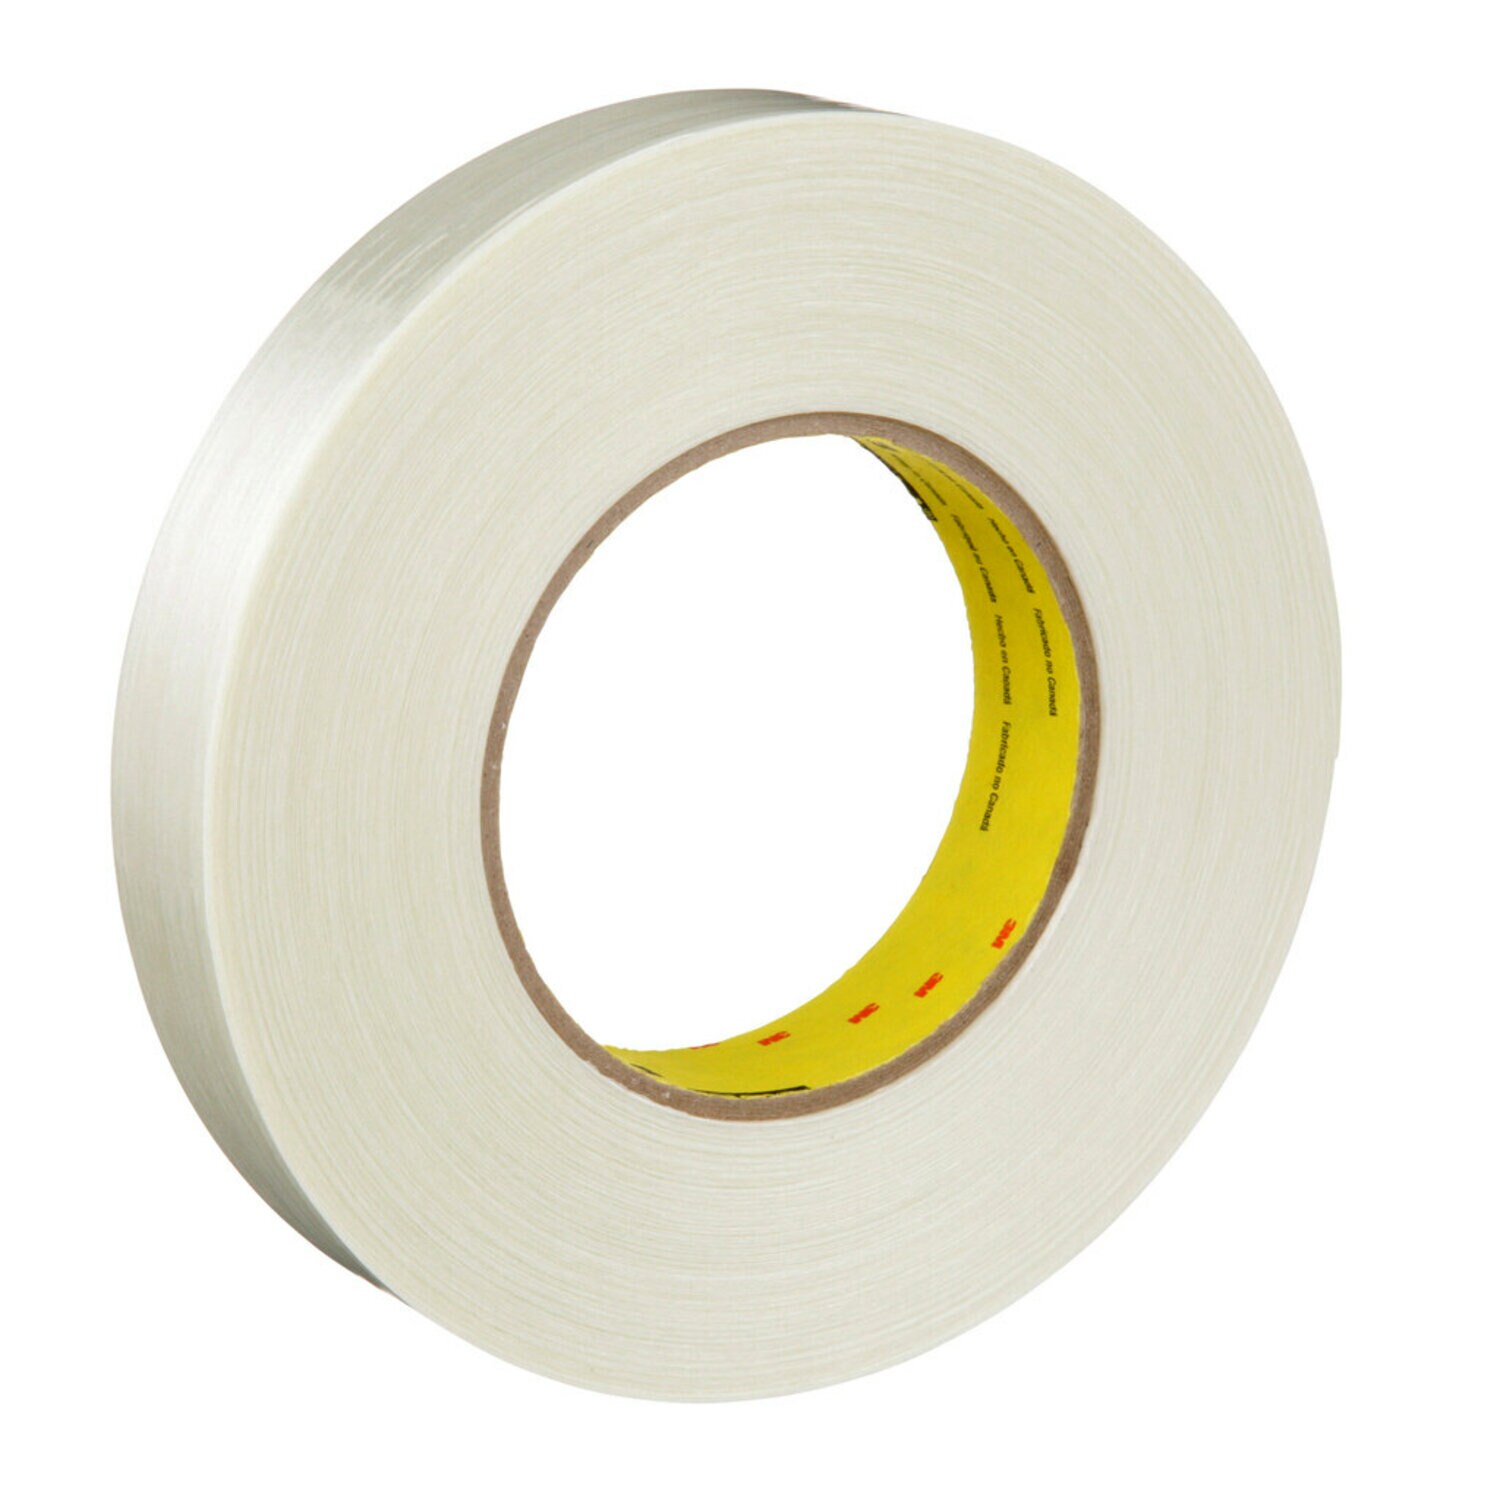 7000124627 - Scotch Filament Tape 890MSR, Clear, 24 mm x 55 m, 8 mil, 36 rolls per
case